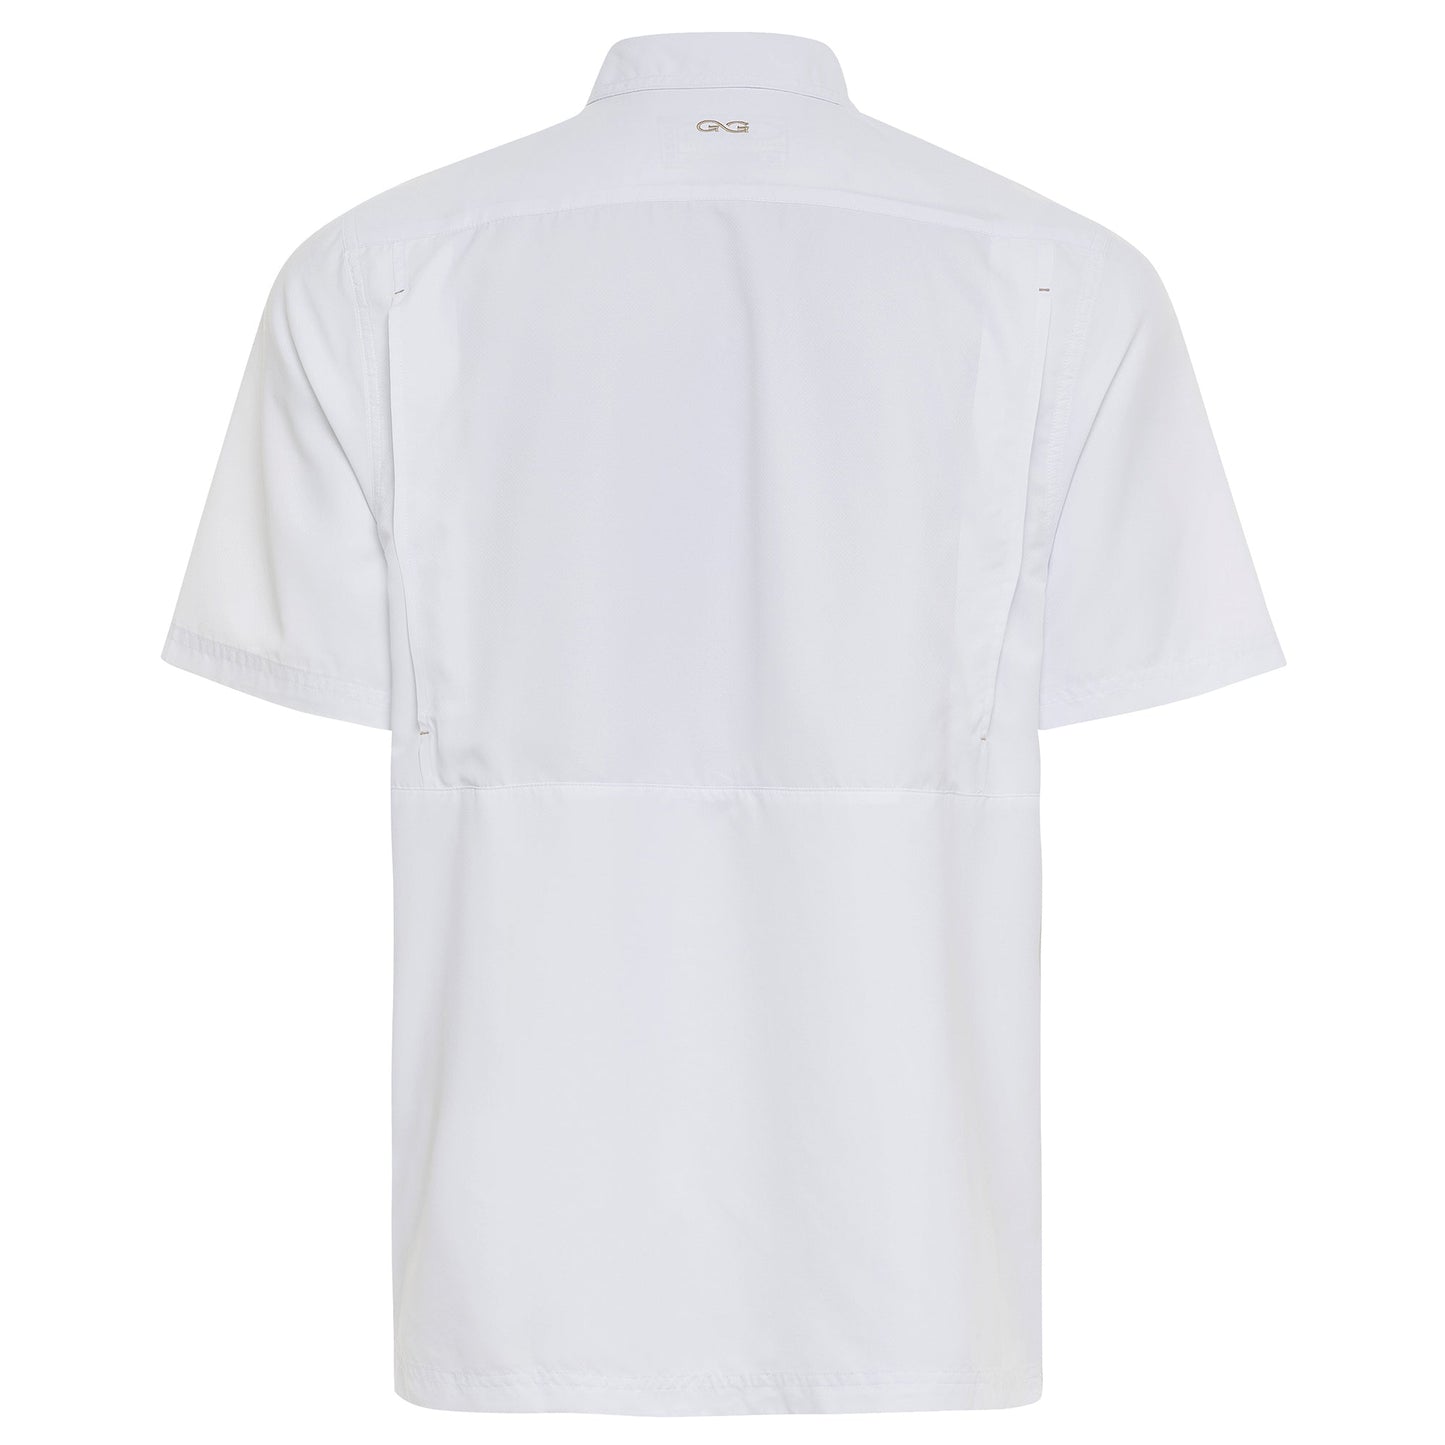 GameGuard White MicroFiber Shirt